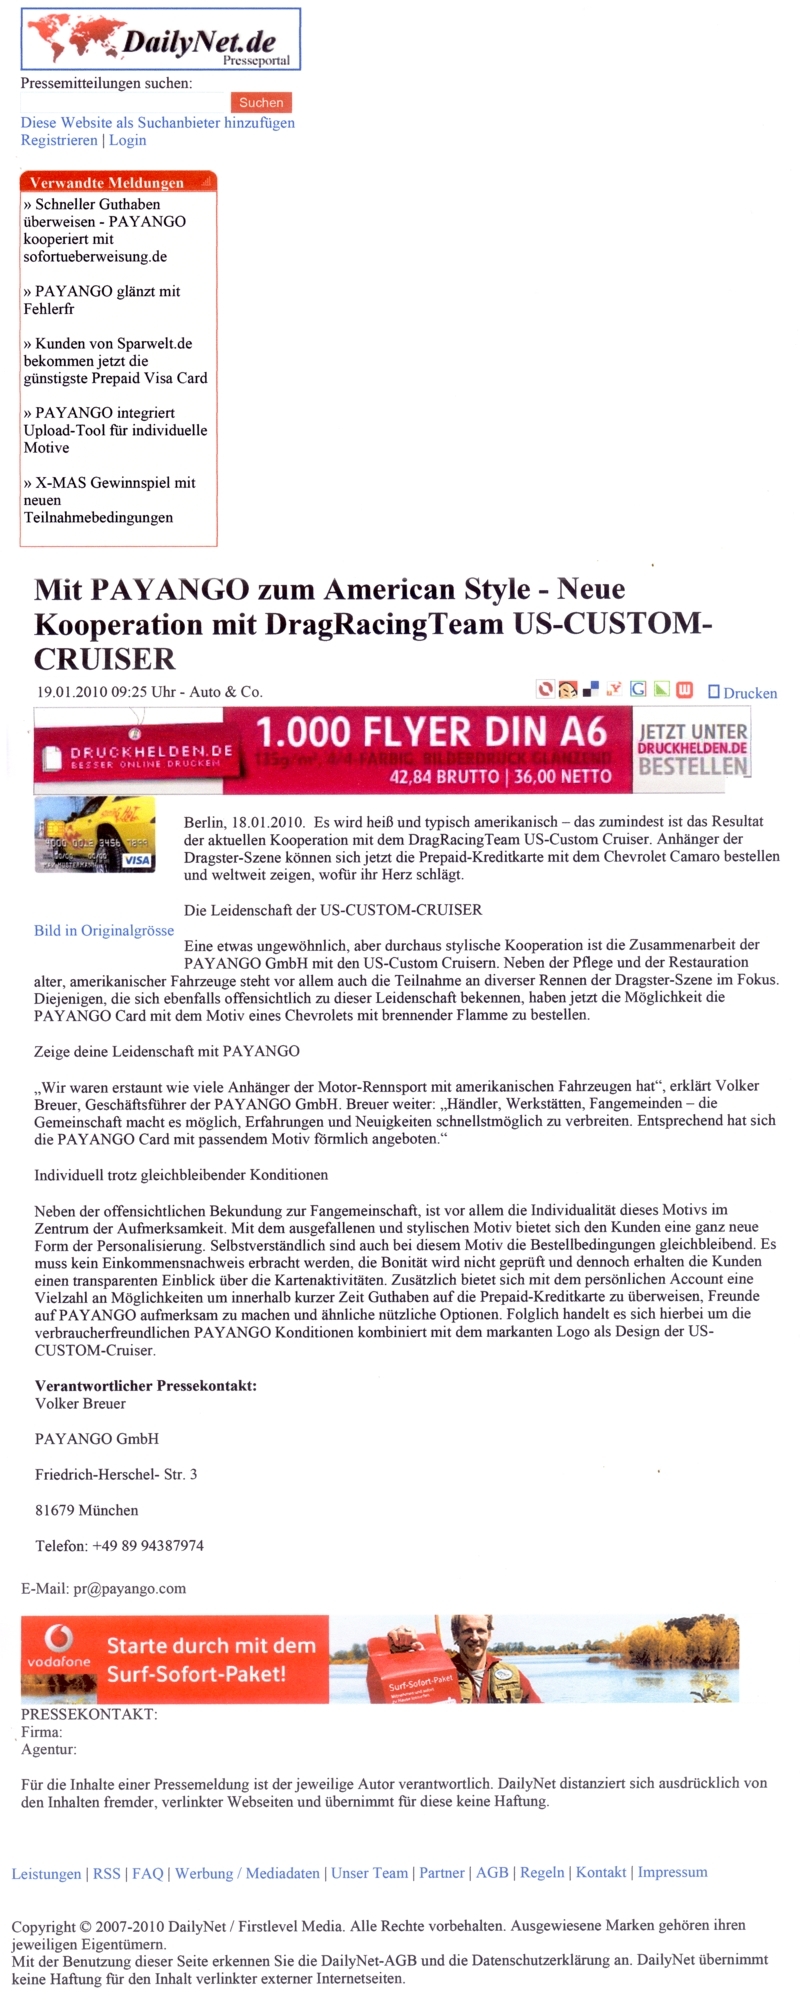 DailyNet Presse-Mitteilung "VISA Prepaid Card US-CUSTOM-CRUISER by PAYANGO"